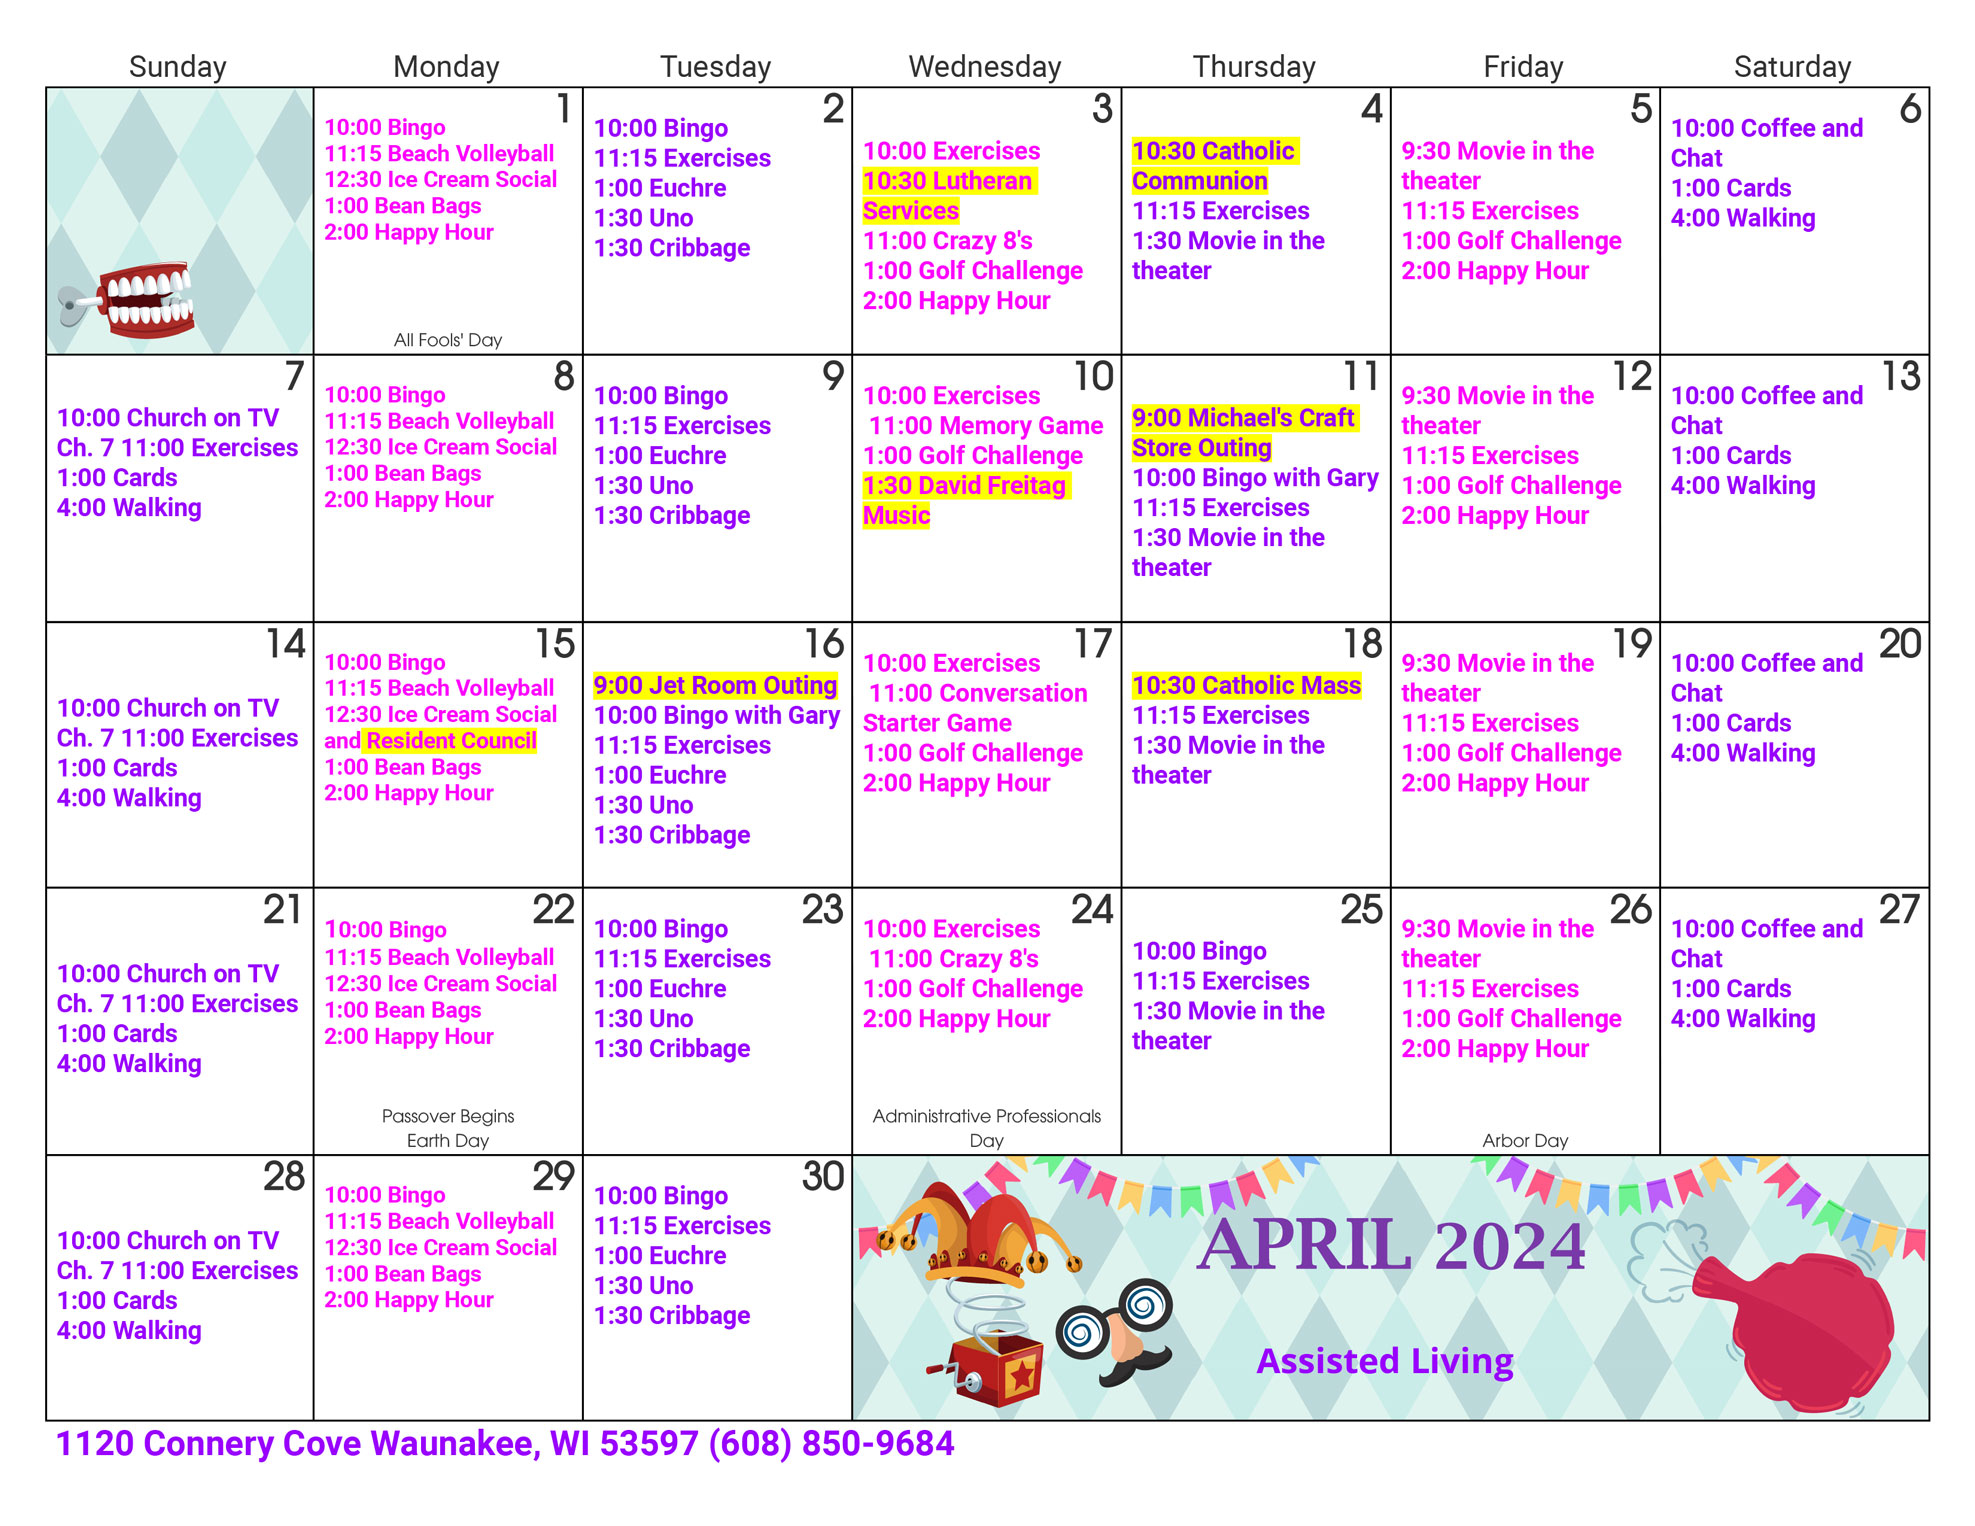 Waunakee Assisted Living April 2024 Activity Calendar